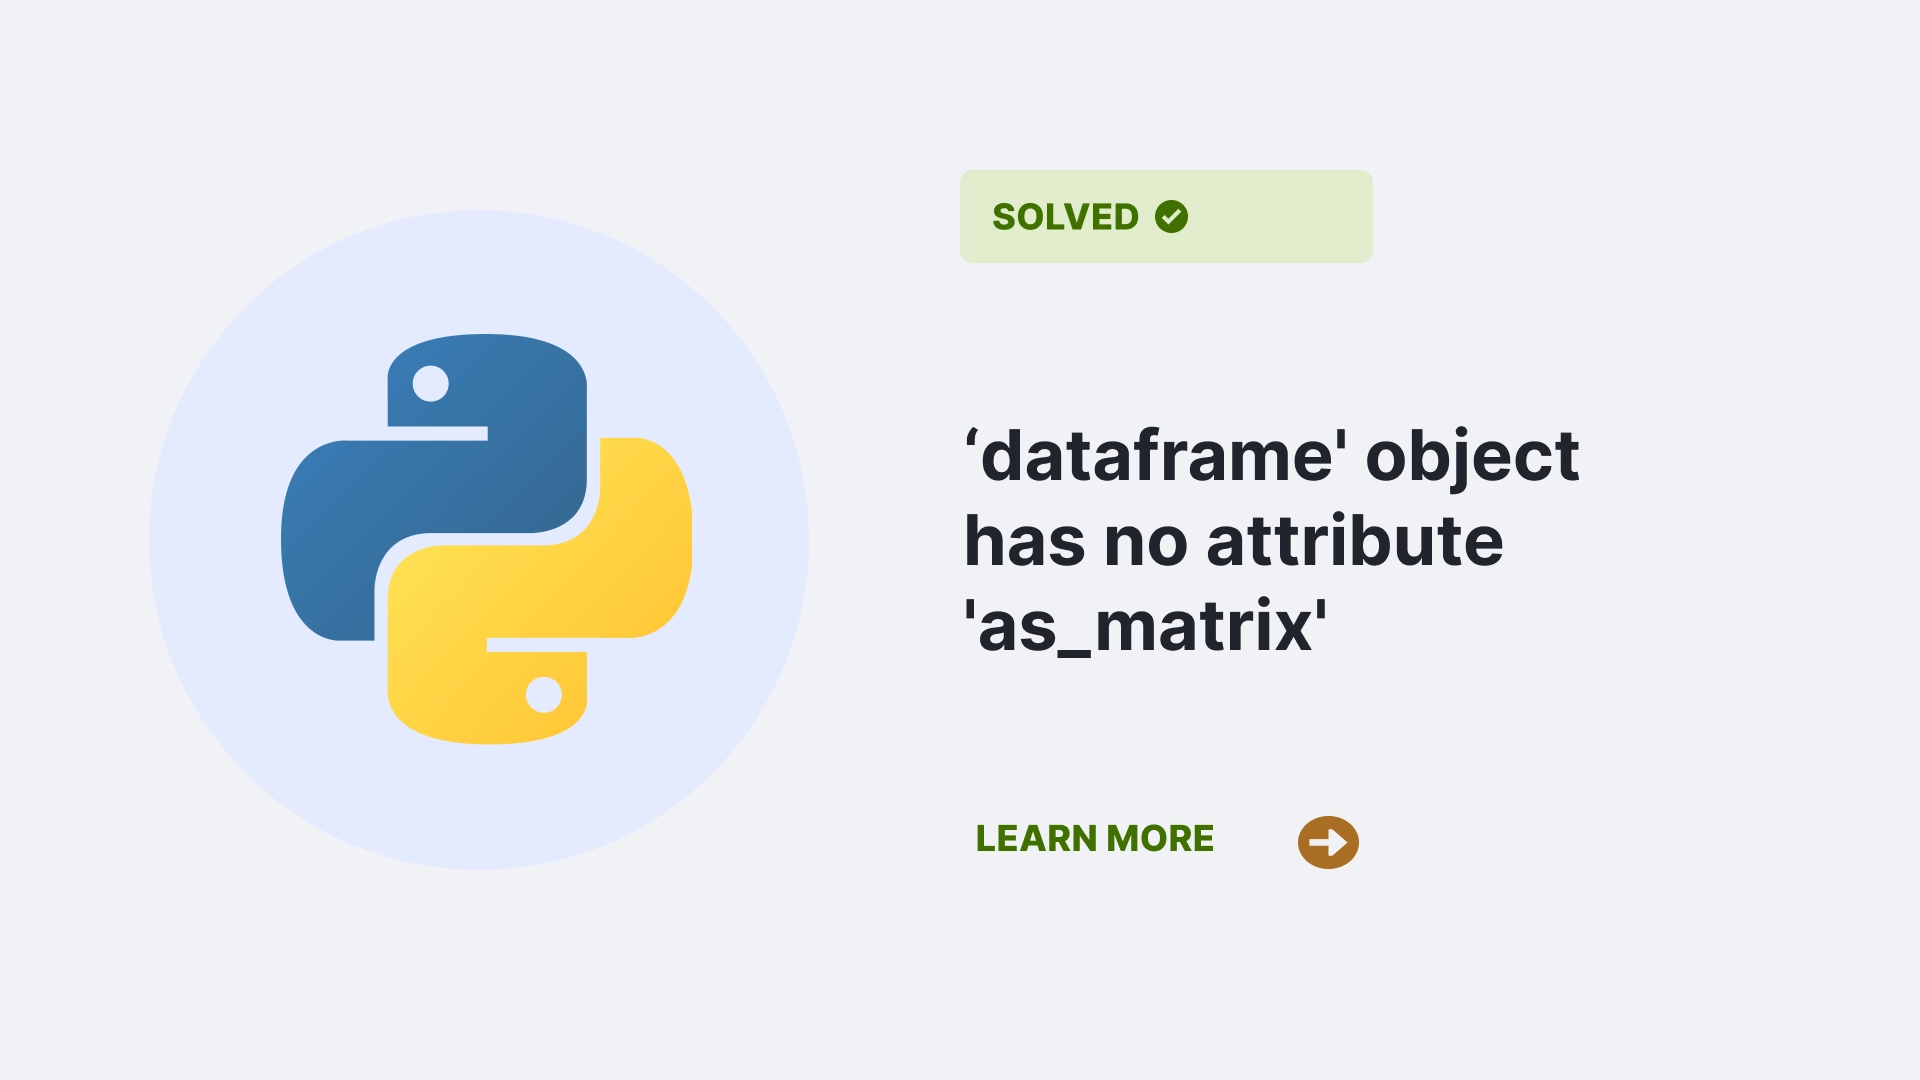 dataframe' object has no attribute 'as_matrix'